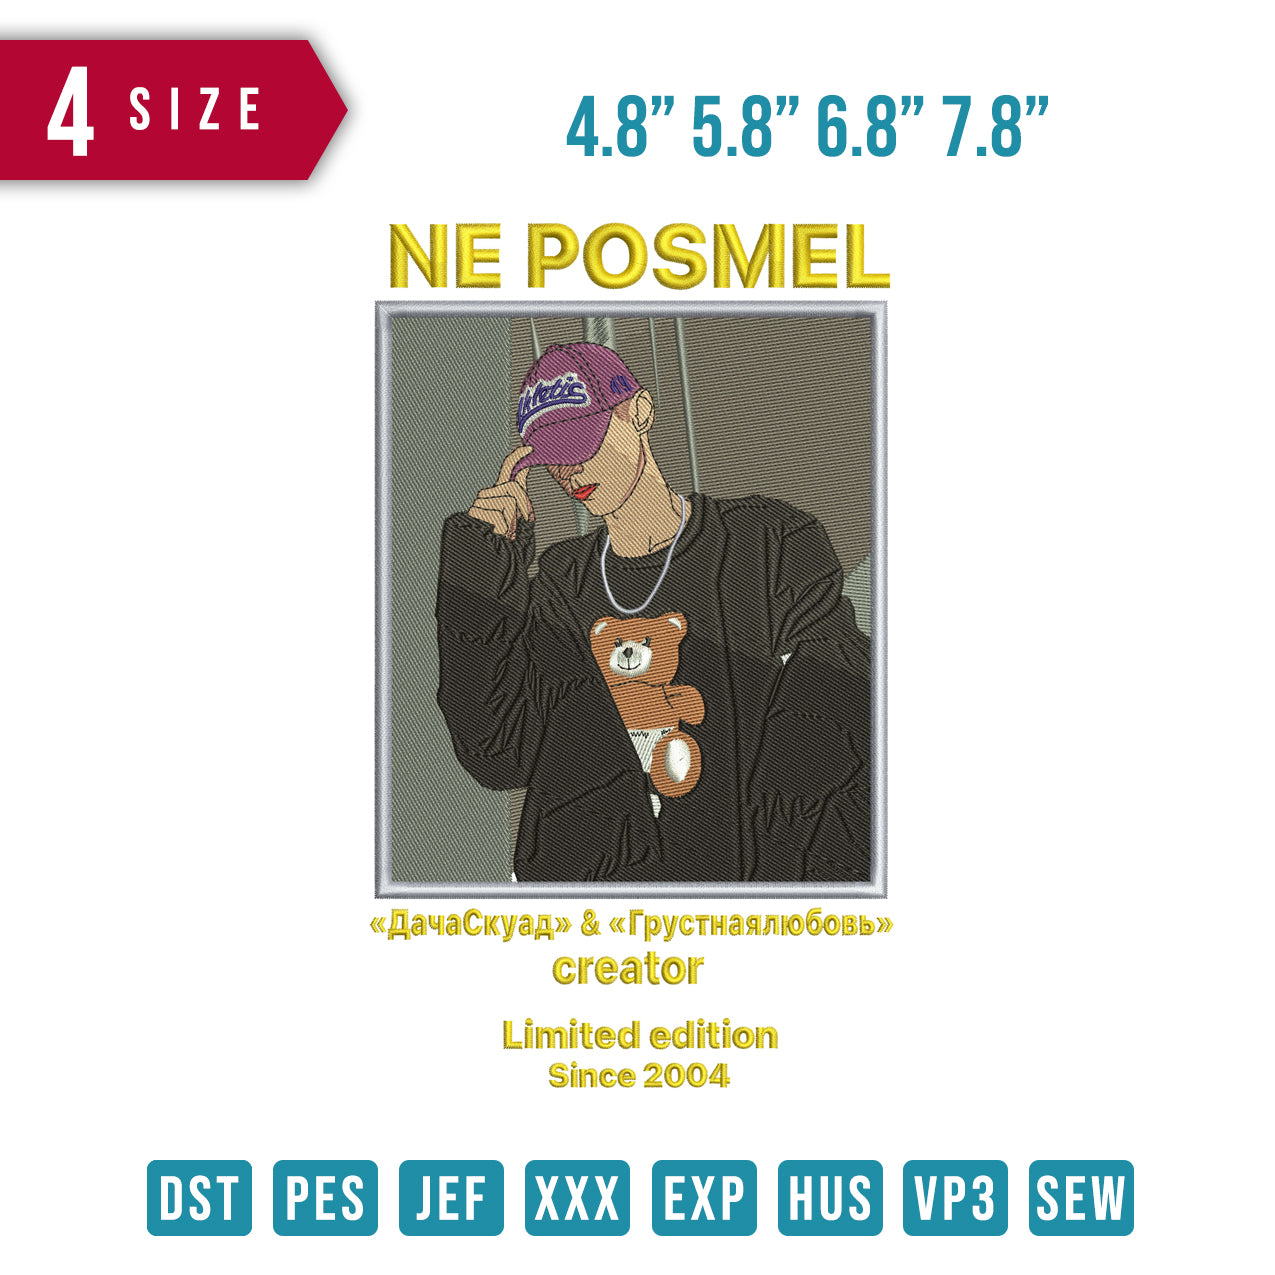 Neo Posmel